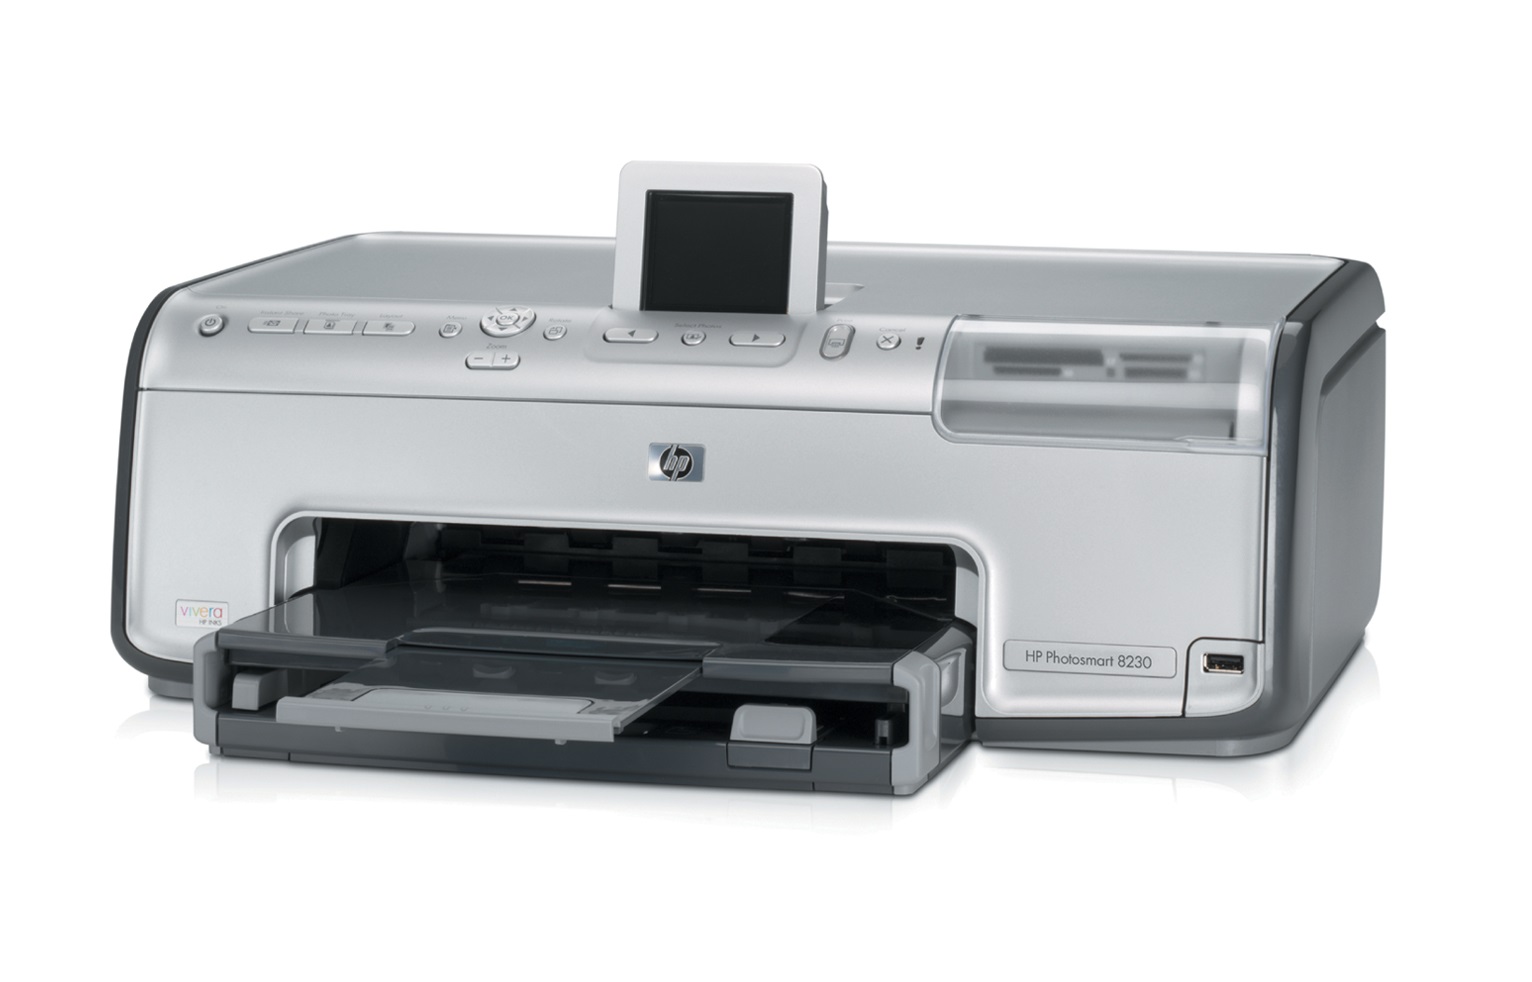 Tiskárna HP Photosmart 8238